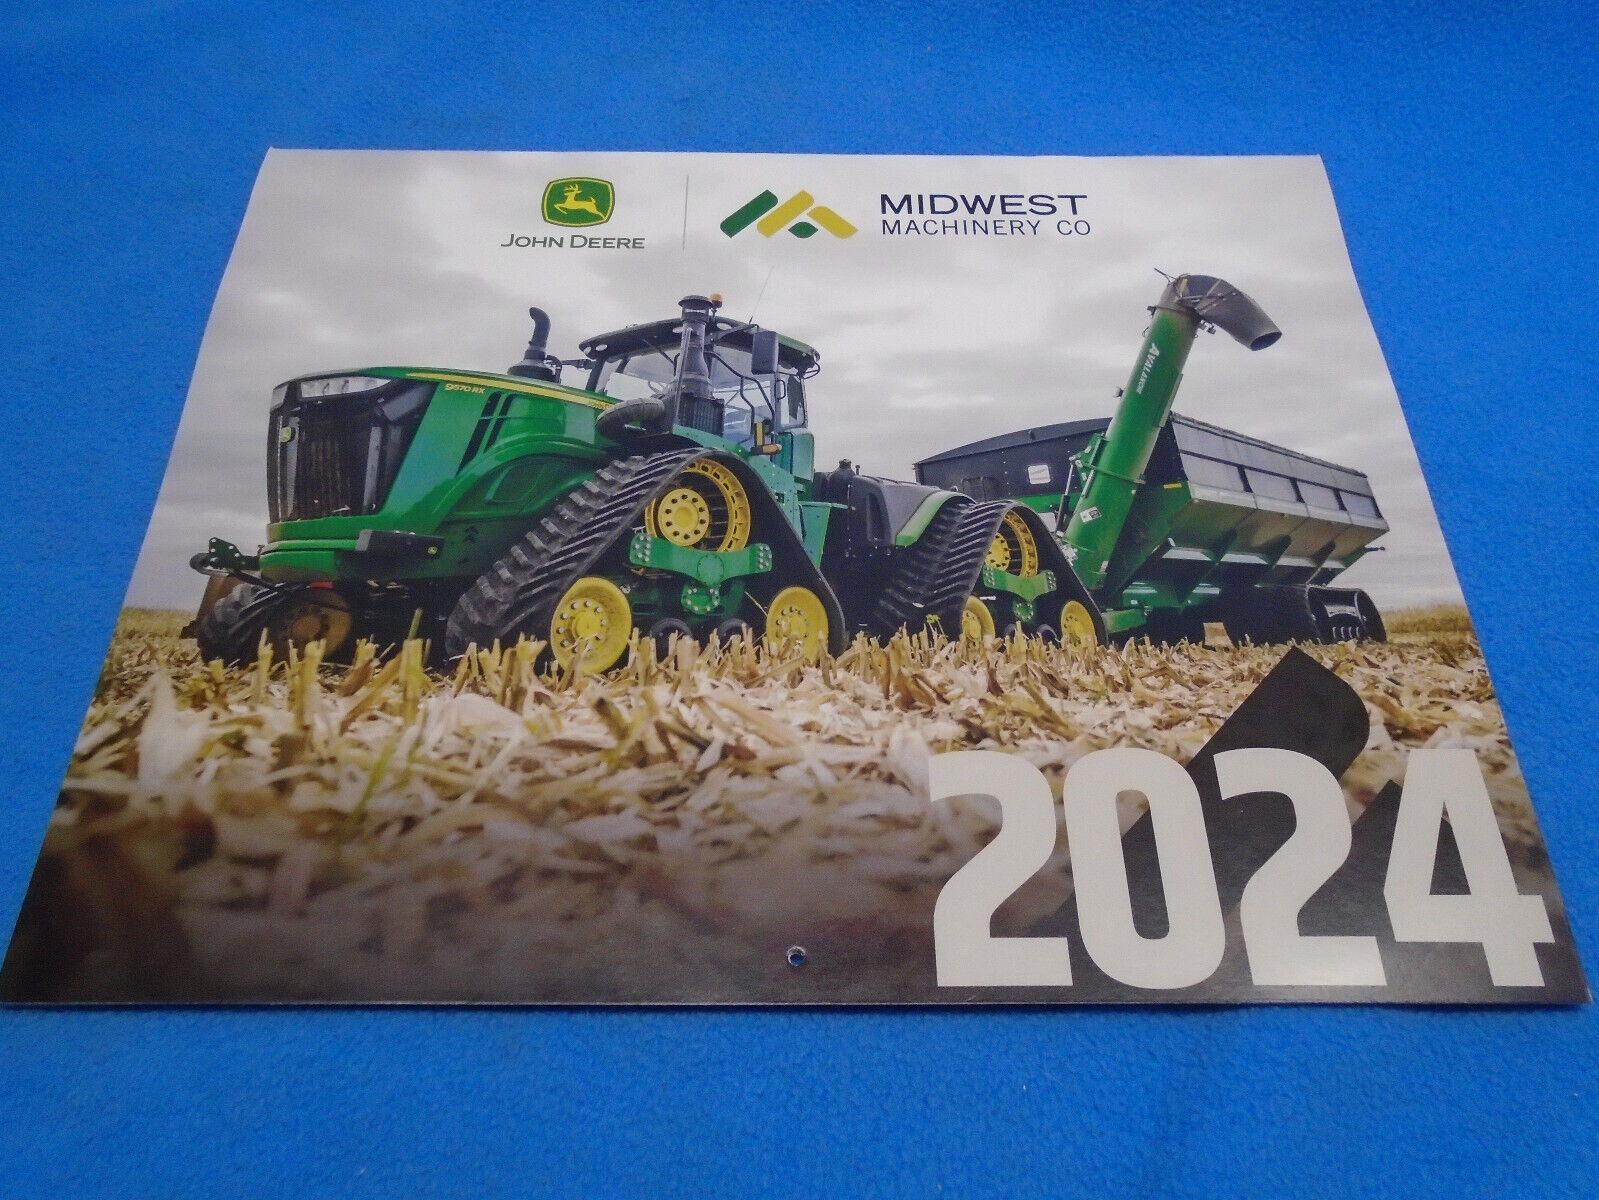 2024 John Deere Calendar Midwest Machinery Co. Minnesota for Sale